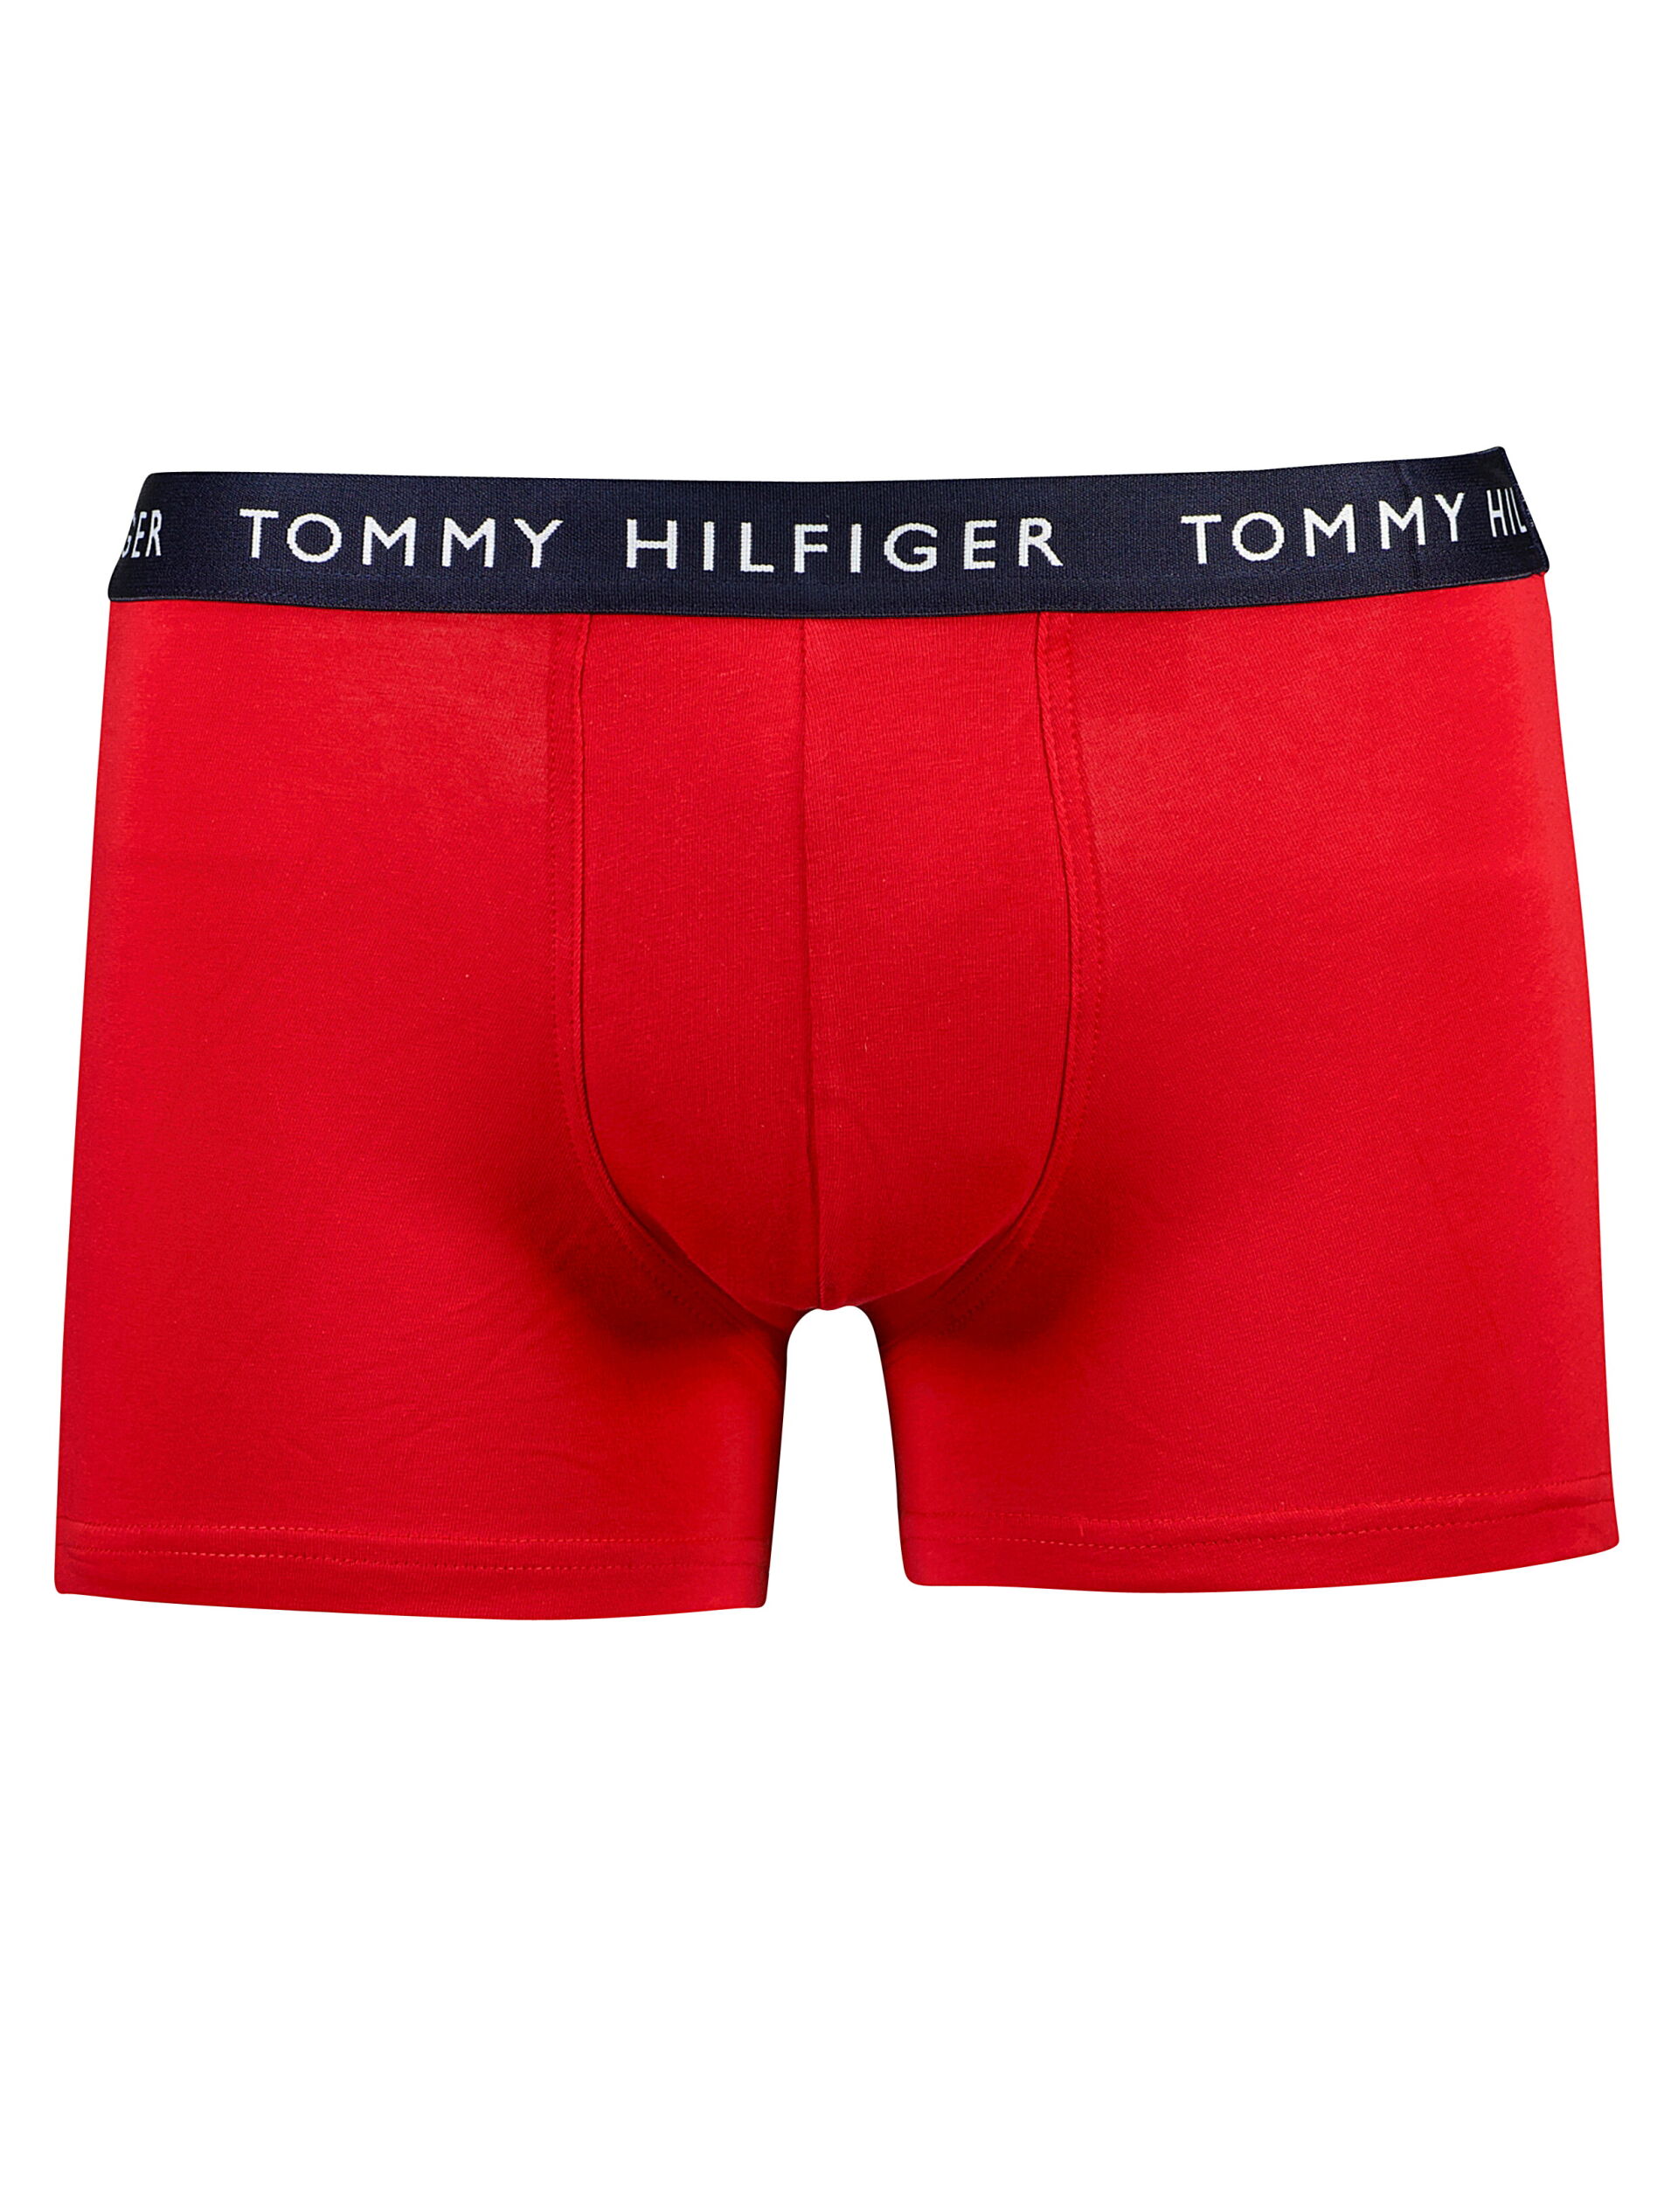 Tommy Hilfiger  Tights 90-900792